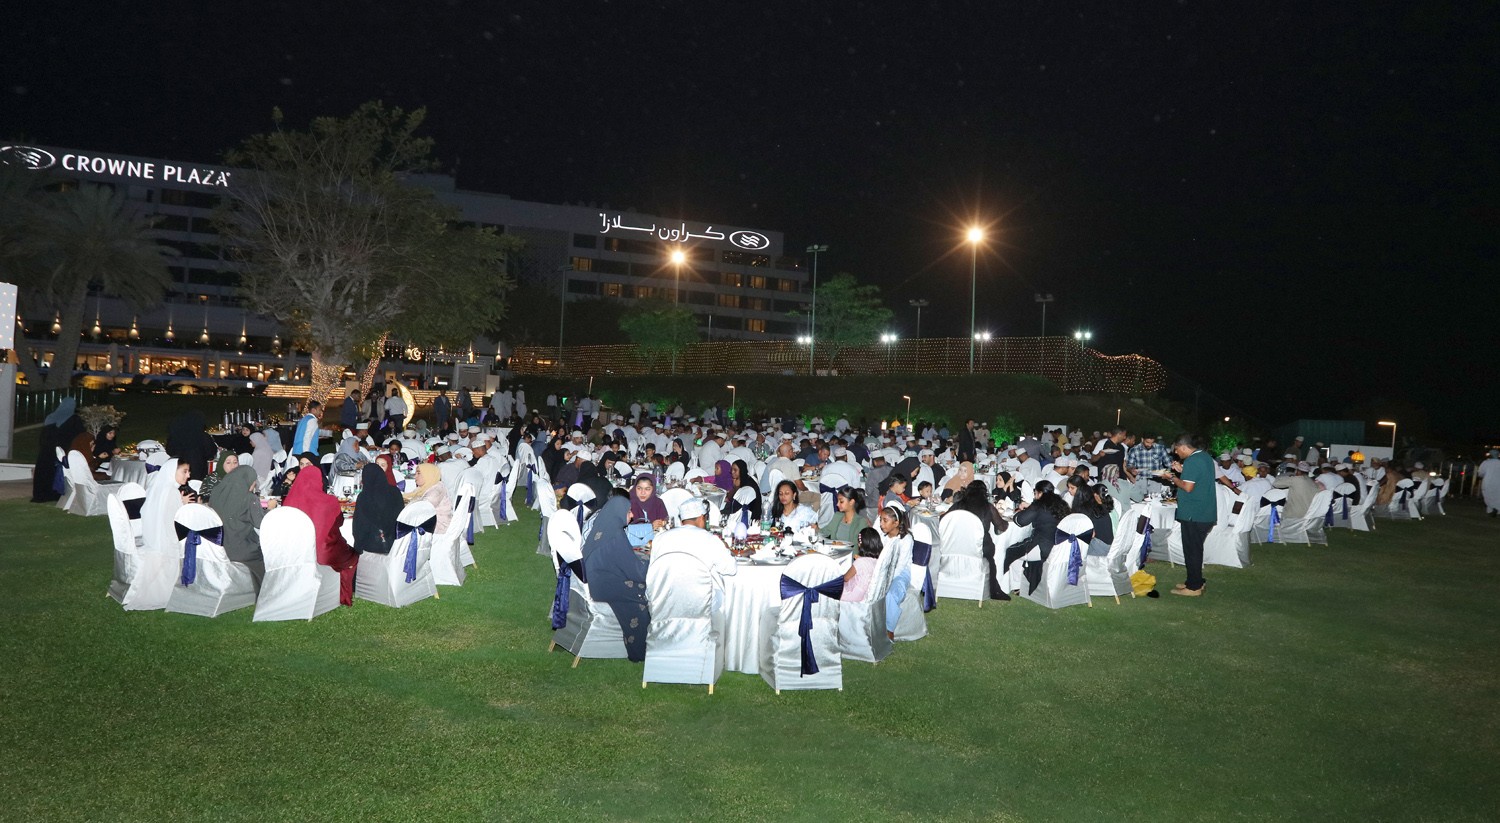 Suhail Bahwan Group Hosts Iftar